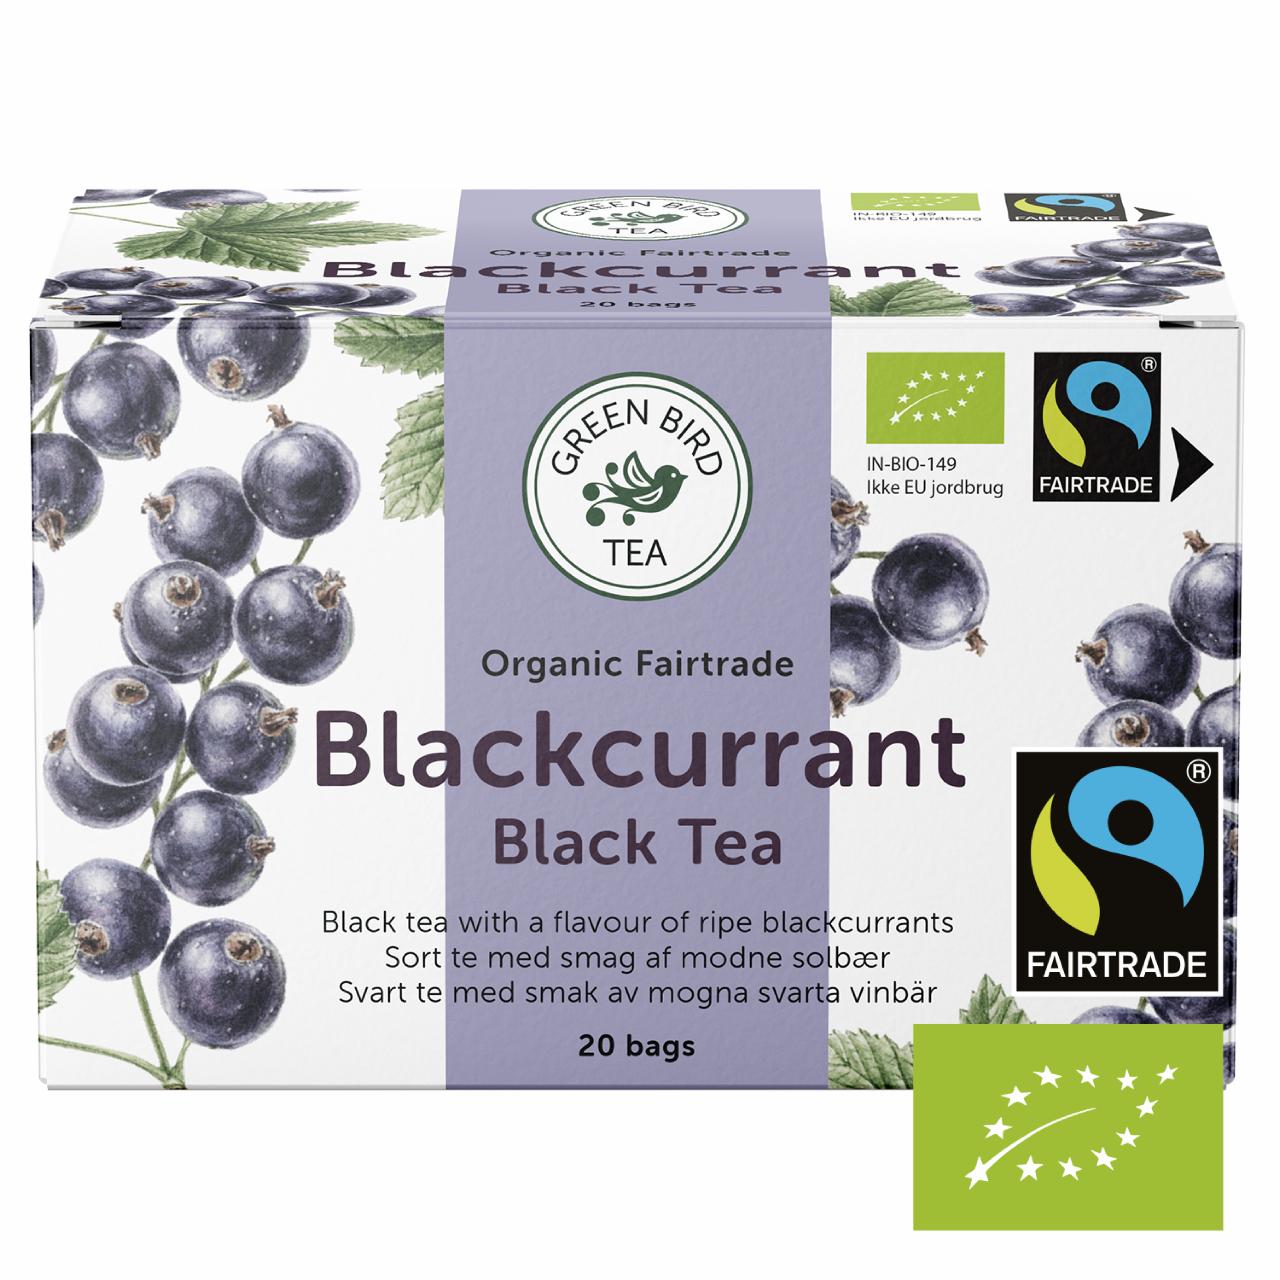 Green Bird Blackcurrant Black Tea Økologisk Fairtrade 